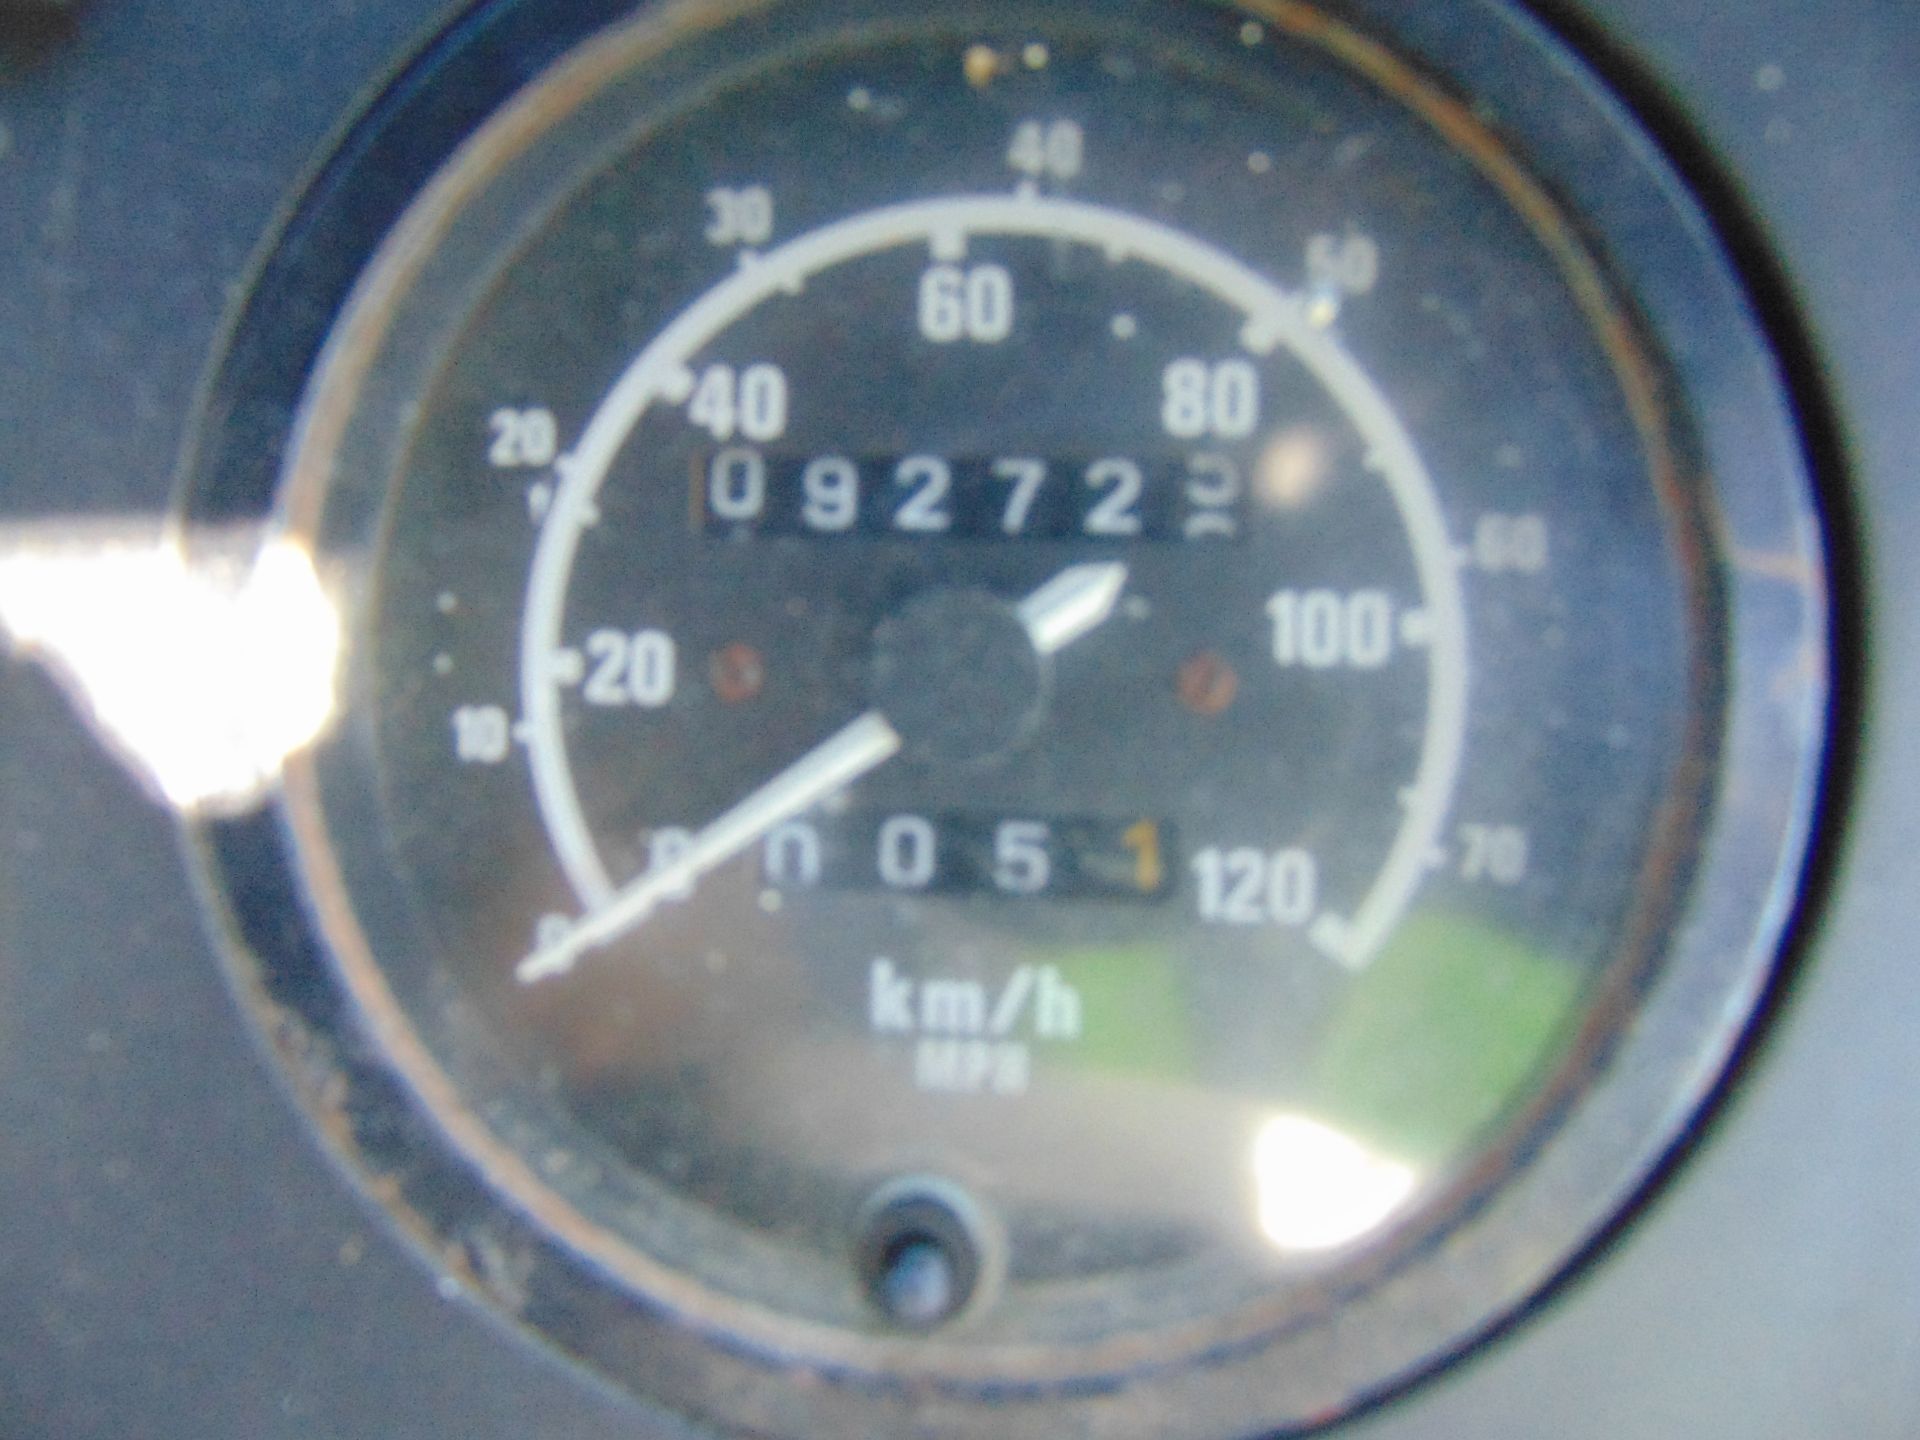 Leyland Daf 45/150 4 x 4 - Image 8 of 11